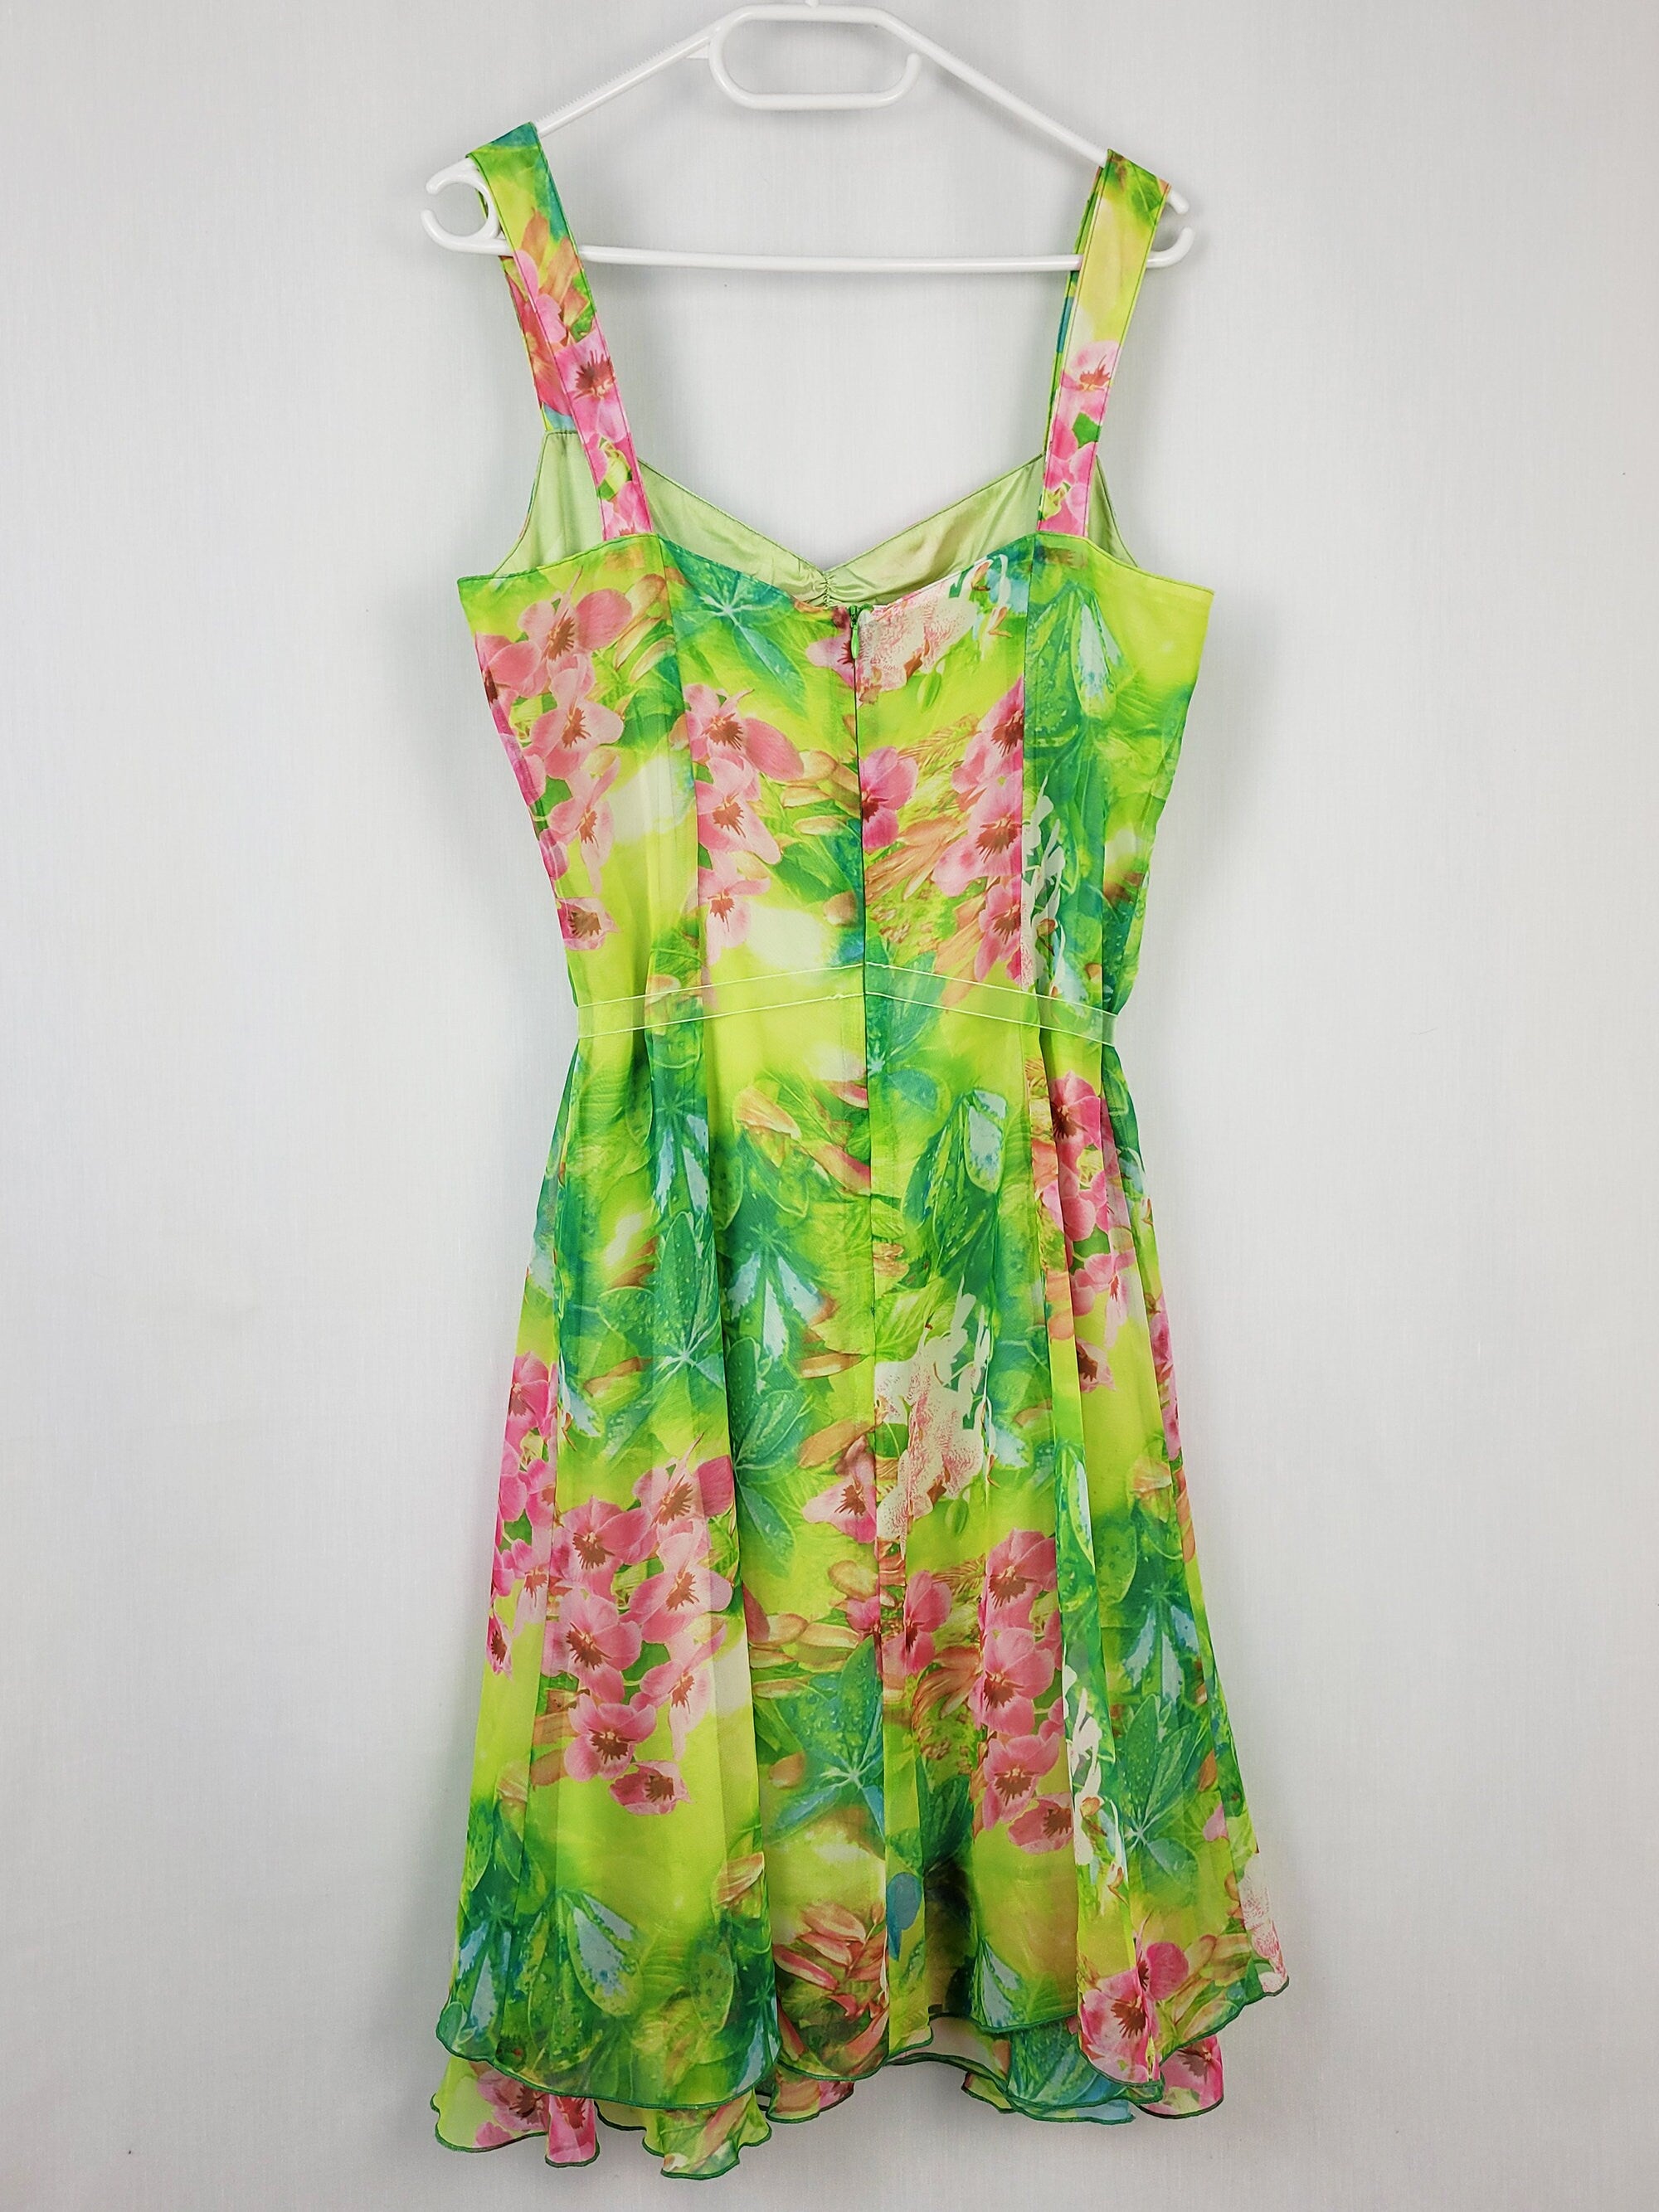 Vintage 90s green colorful floral chiffon summer slip dress